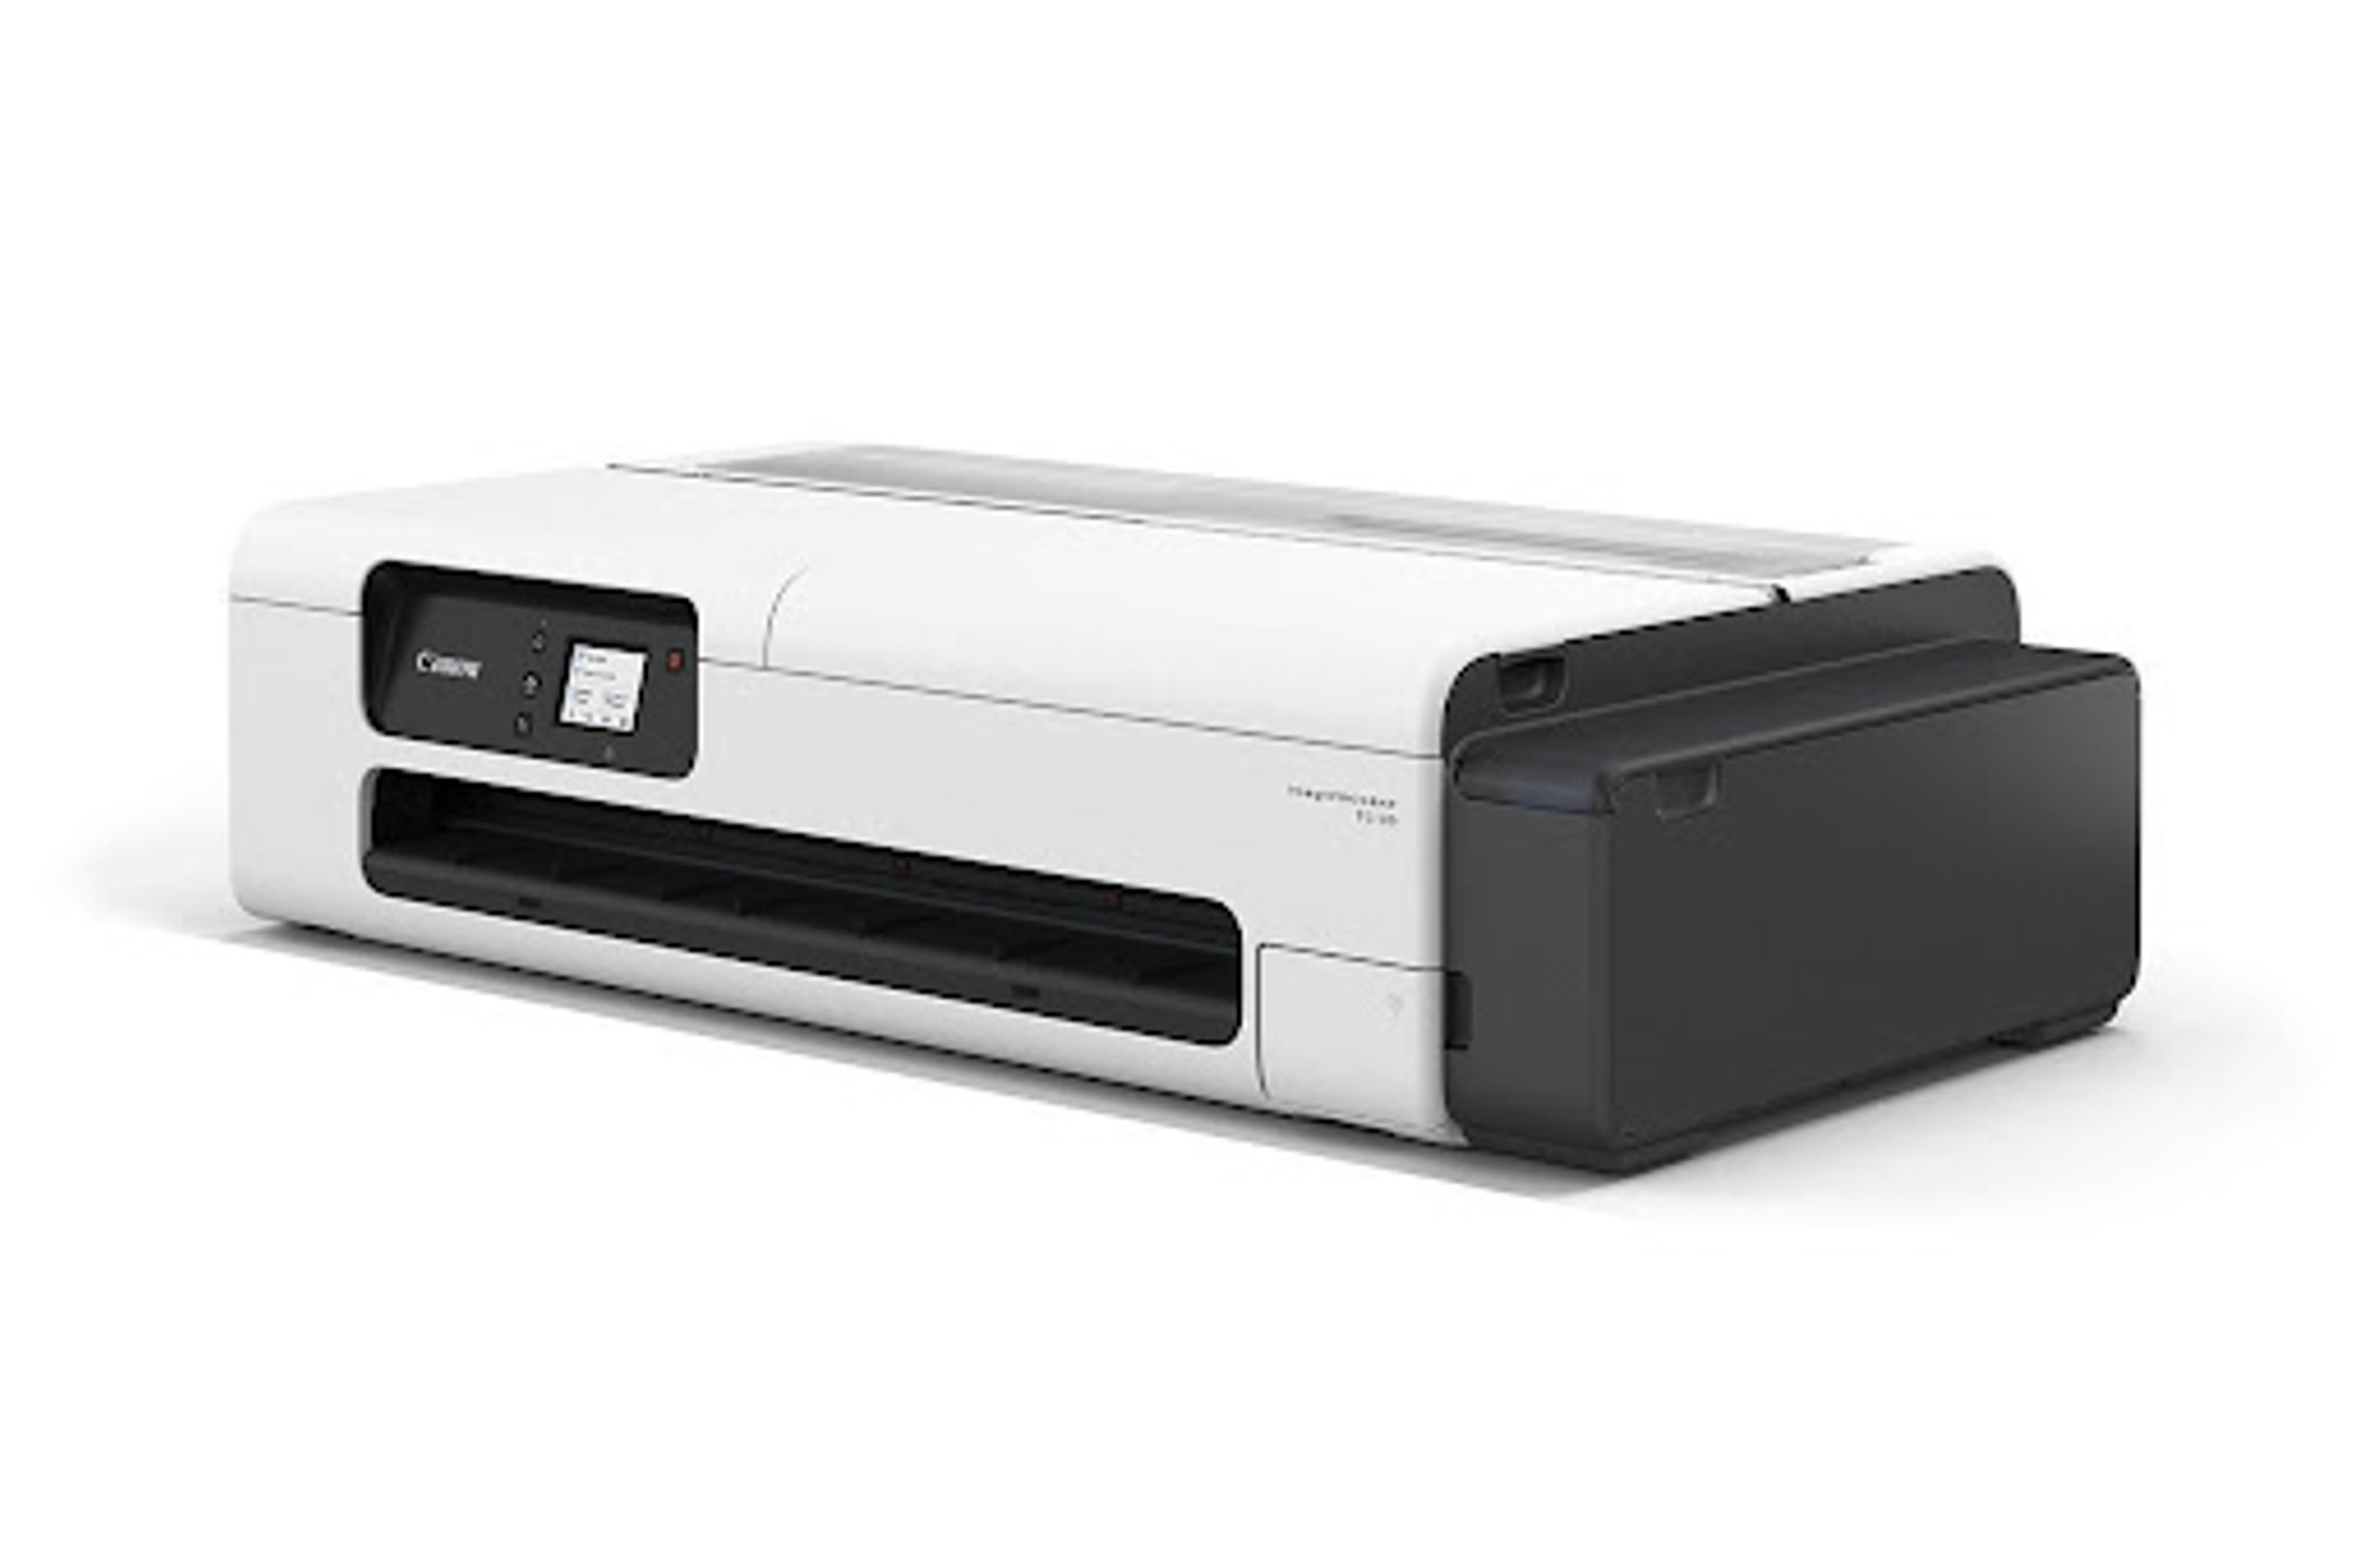 Canon’s First Large-Format Desktop Printer  - Big Prints, Small Footprint